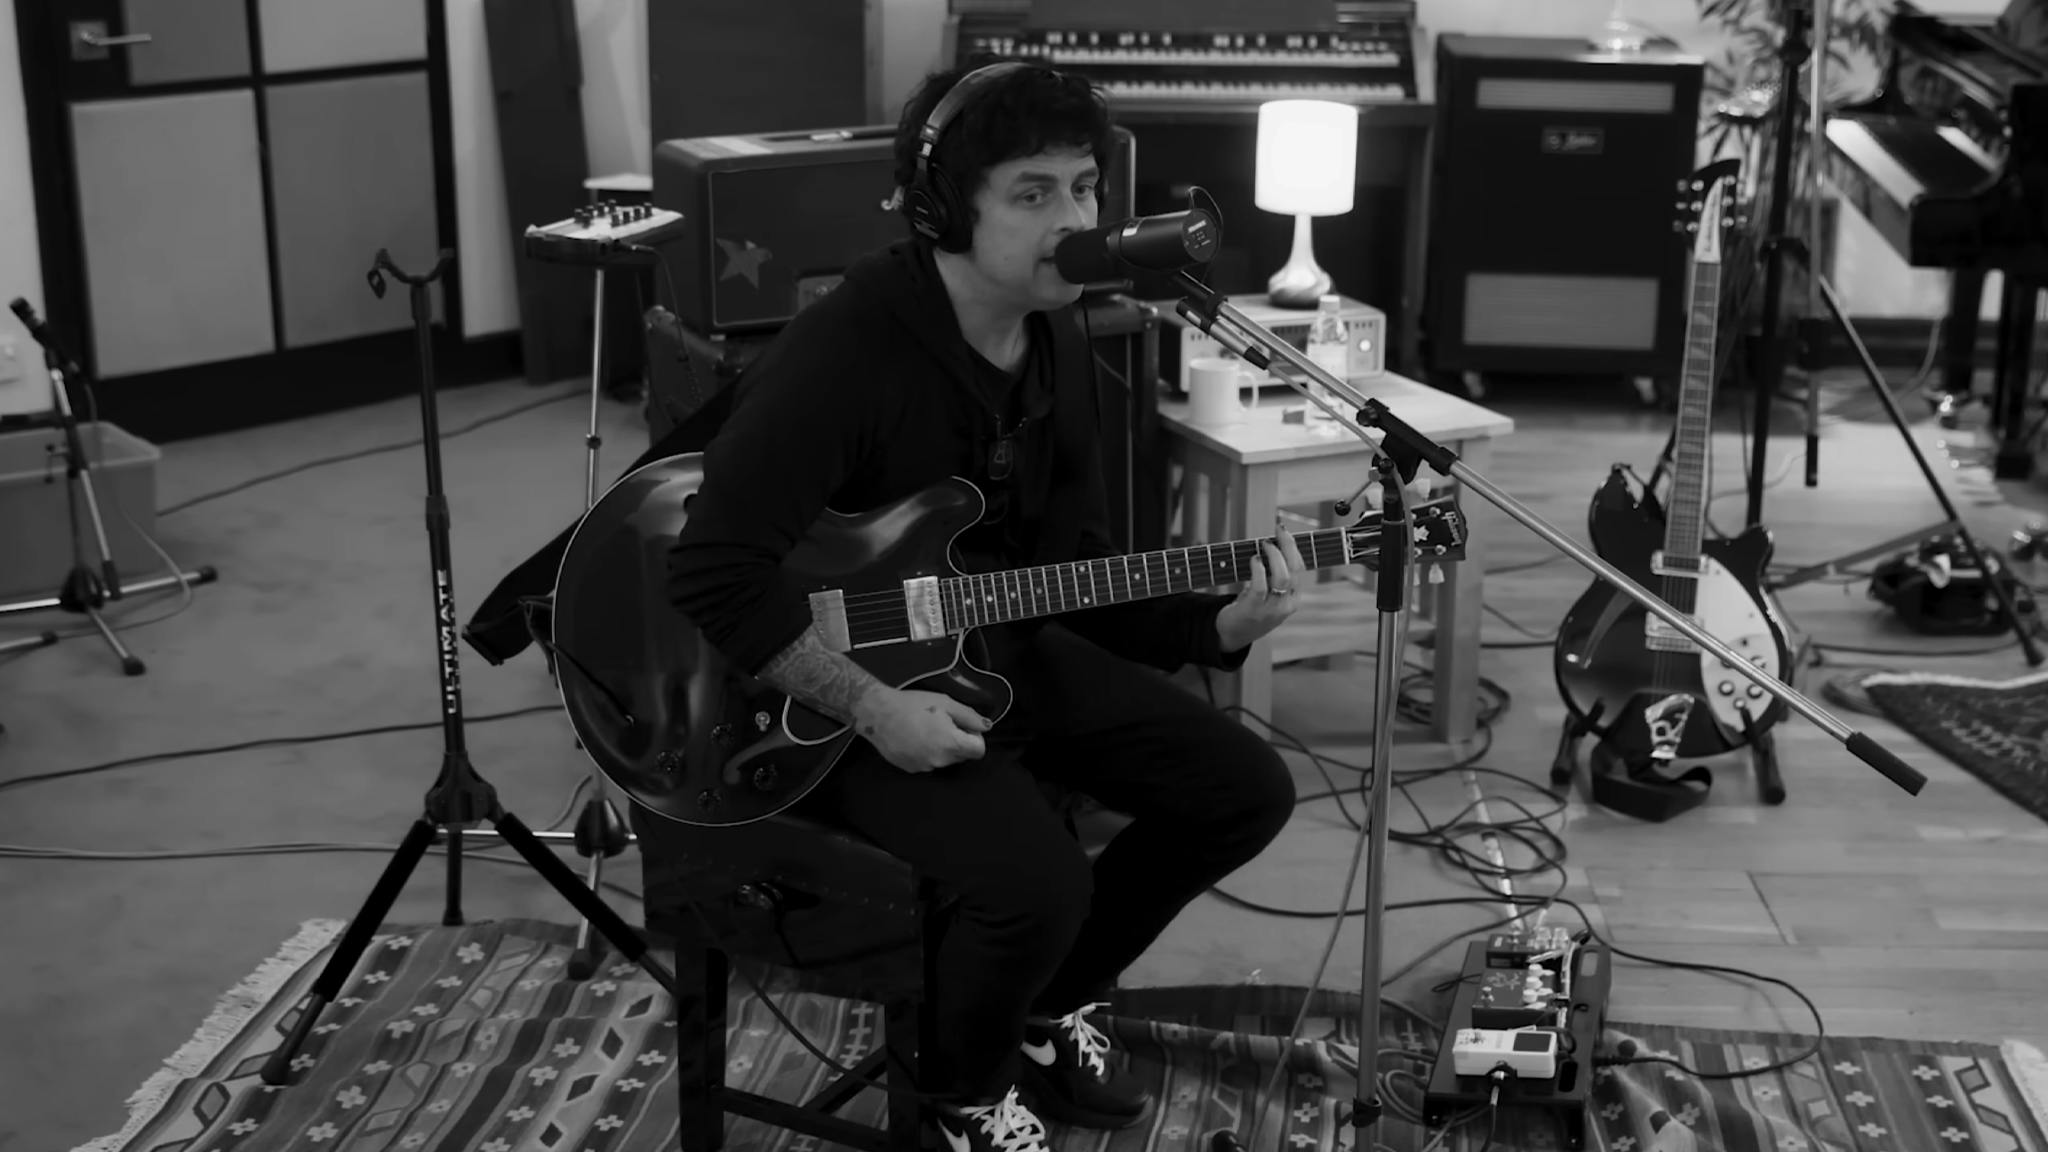 Watch Green Day record new single Dilemma at London’s RAK Studios